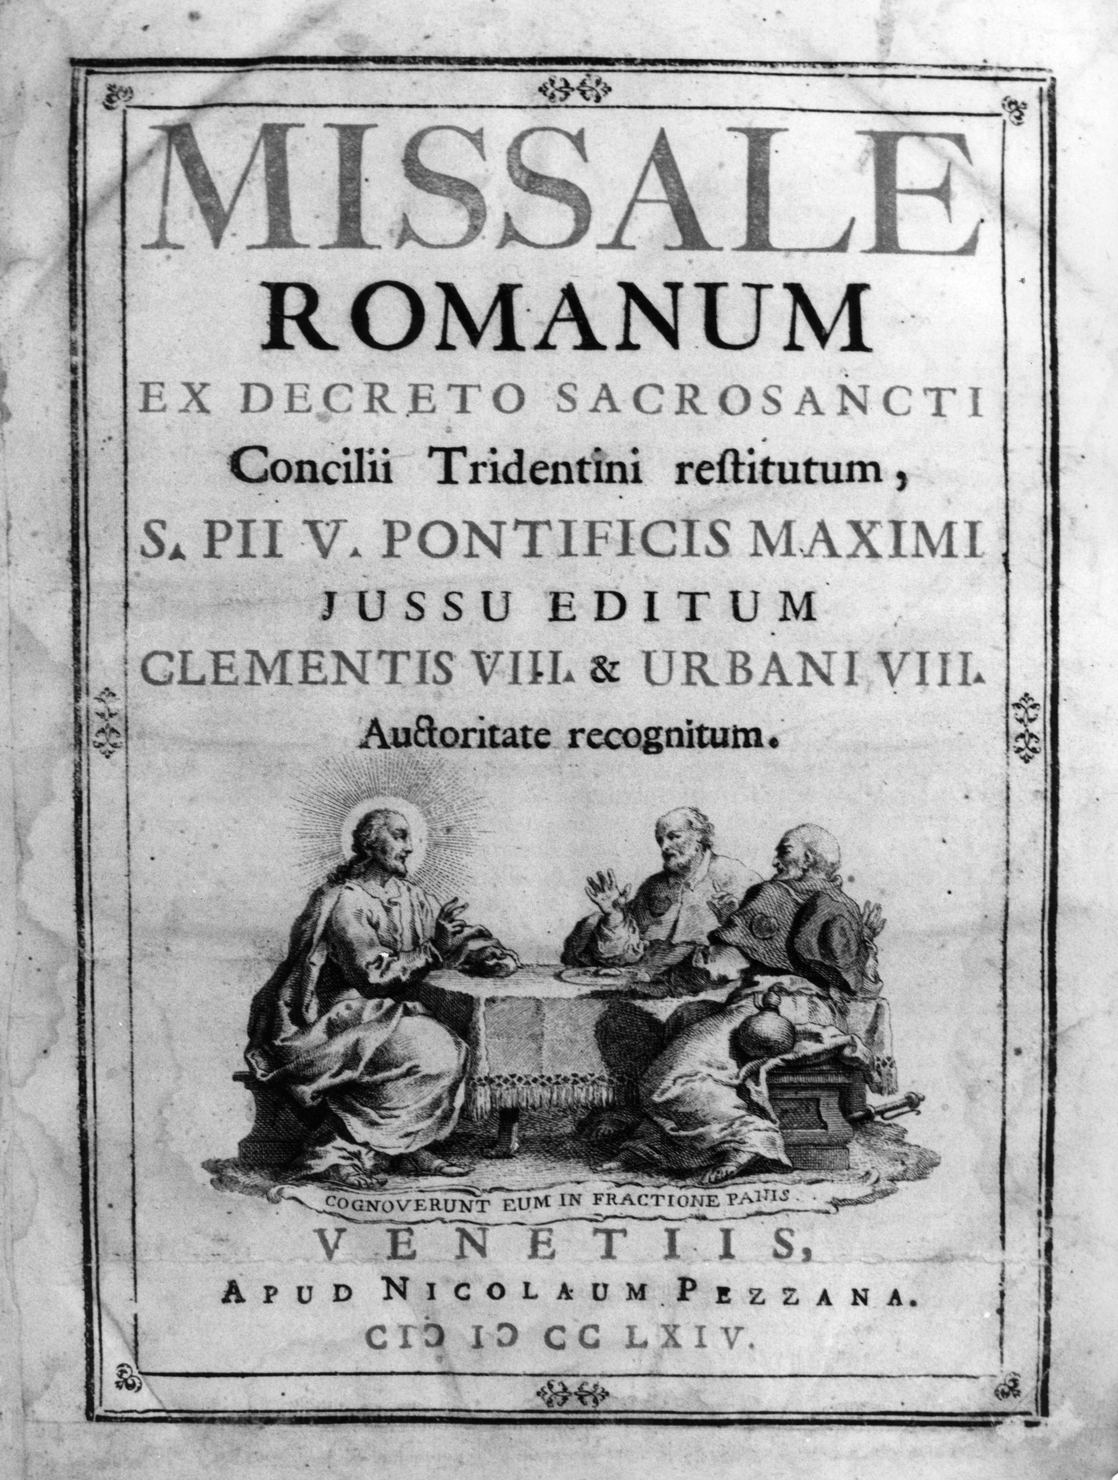 cena in Emmaus (stampa, elemento d'insieme) - ambito veneto (terzo quarto sec. XVIII)